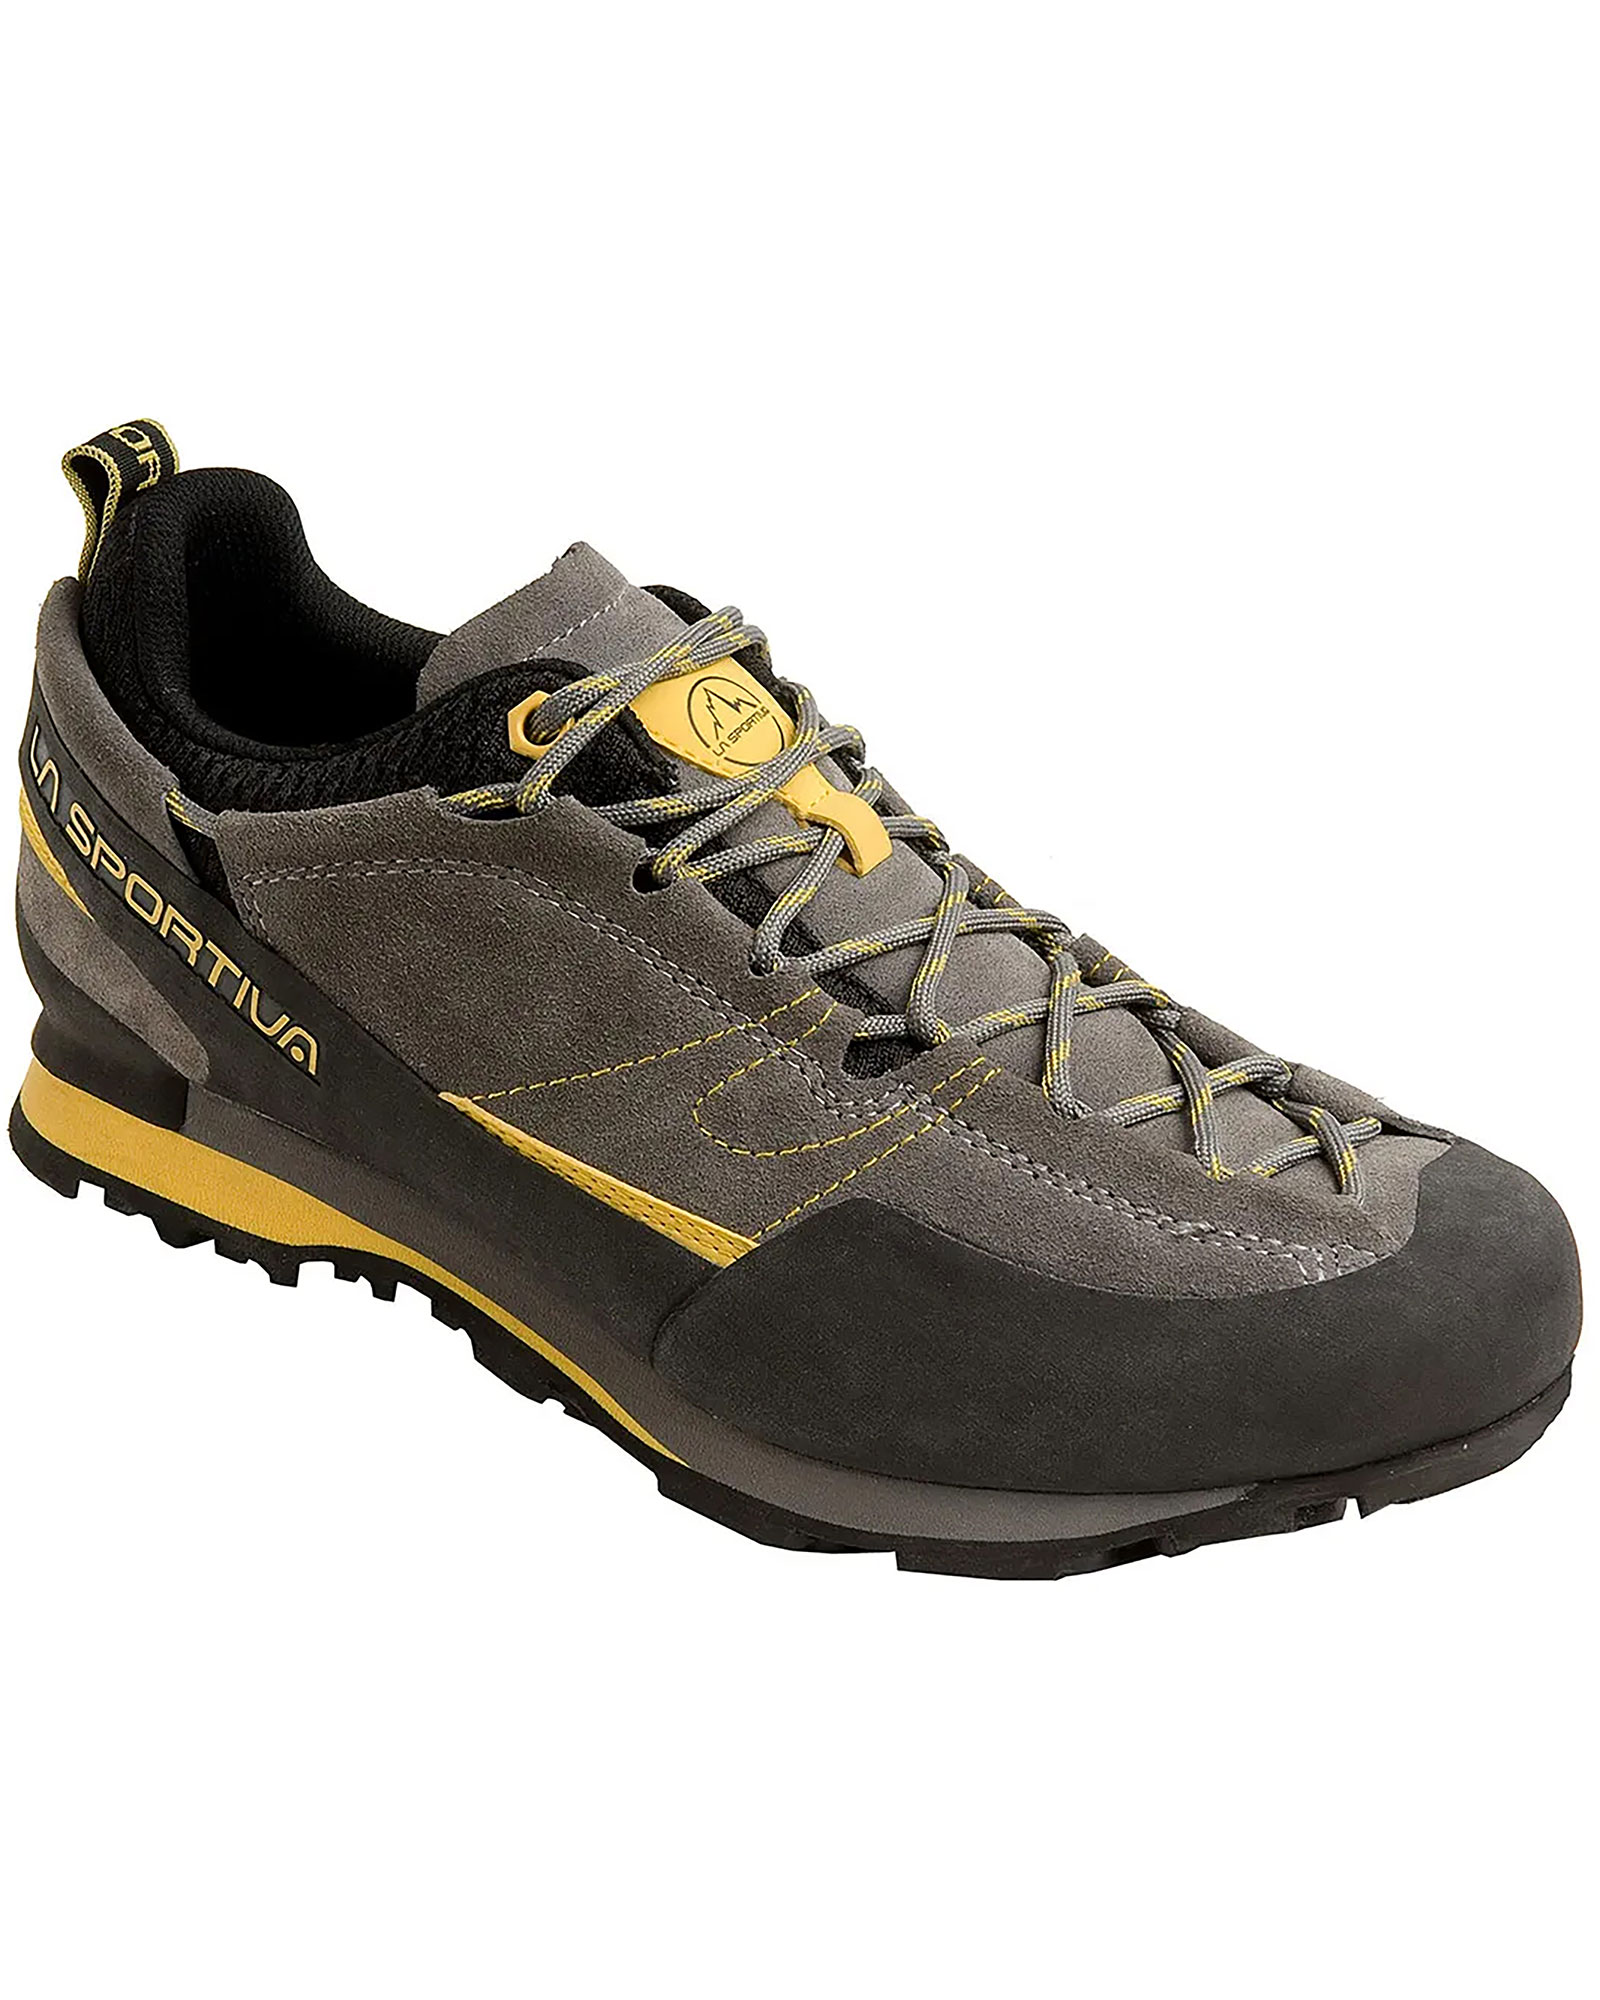 La Sportiva Boulder X Men’s Shoes - Grey/Yellow EU 43